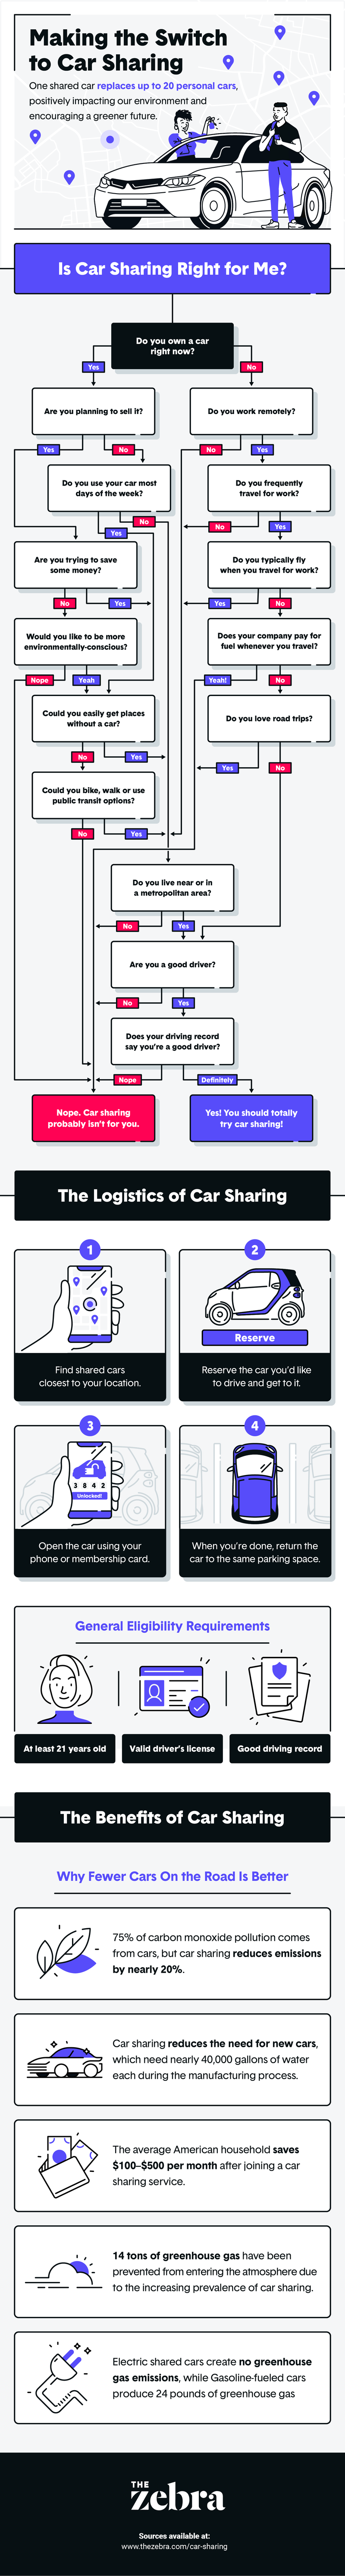 car_sharing_infographic_v3